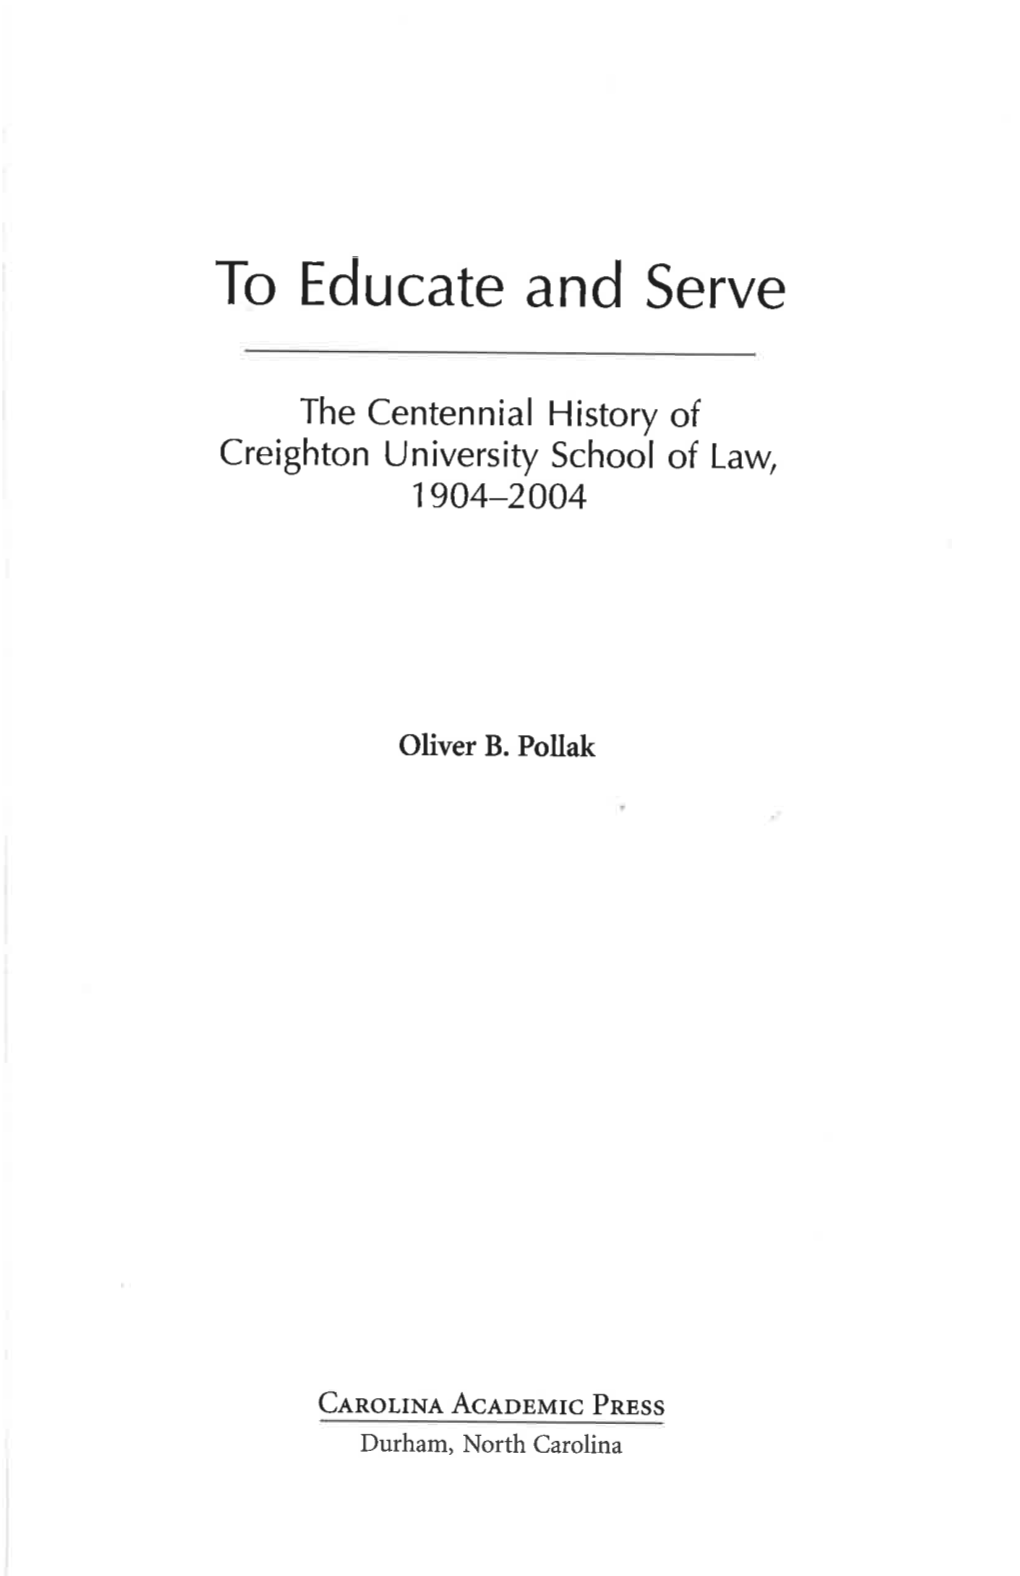 The Centennial History of Creighton University School of Law, 1904-2004